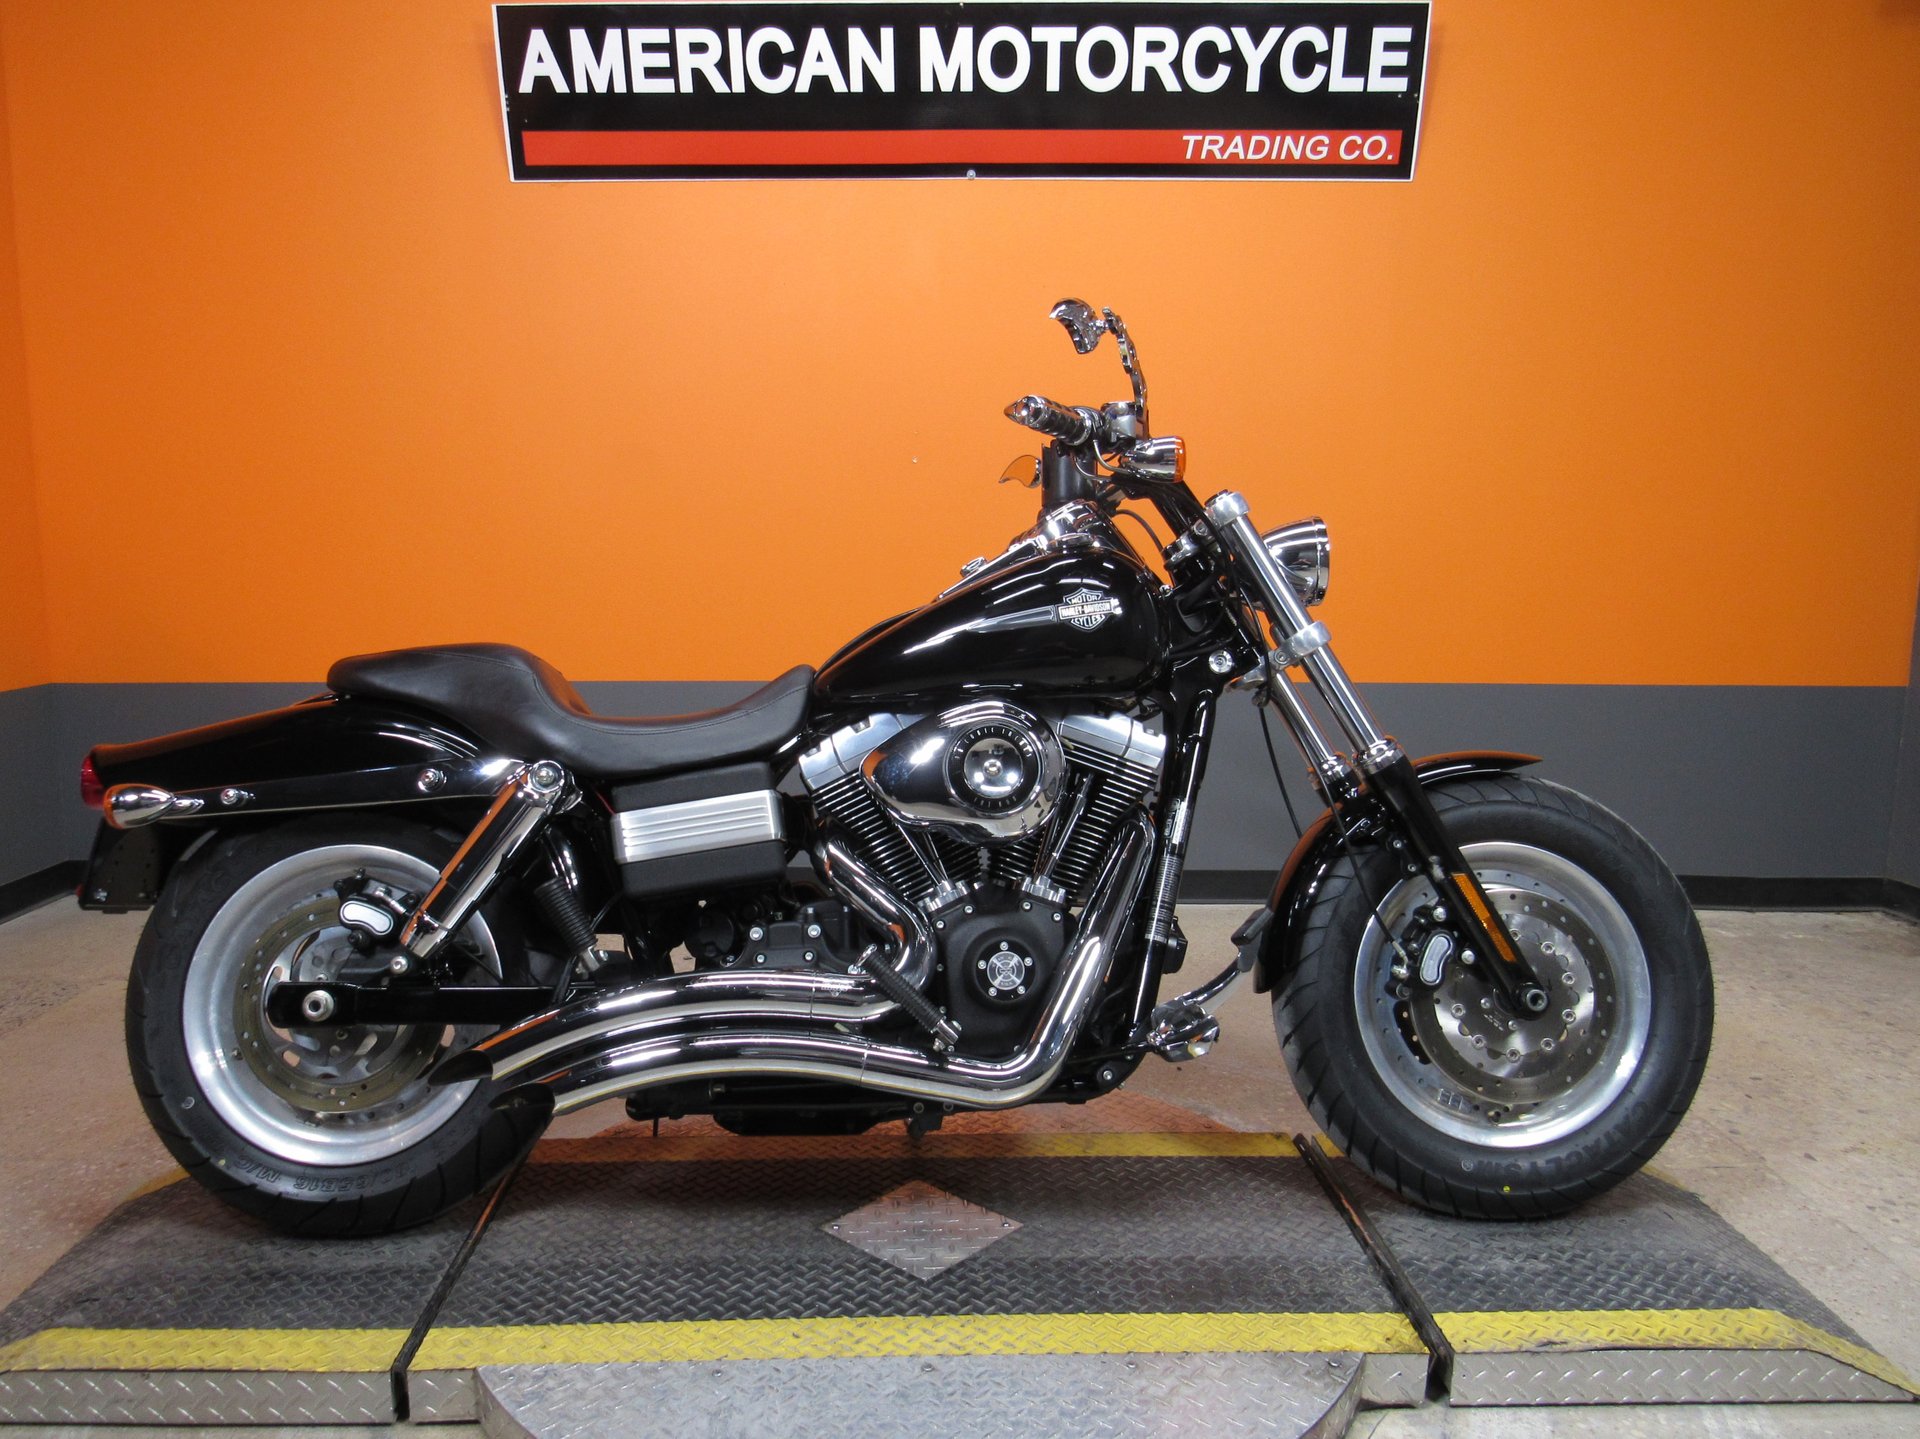 2008 Harley Davidson Dyna Fat Bob American Motorcycle Trading Company Used Harley Davidson Motorcycles